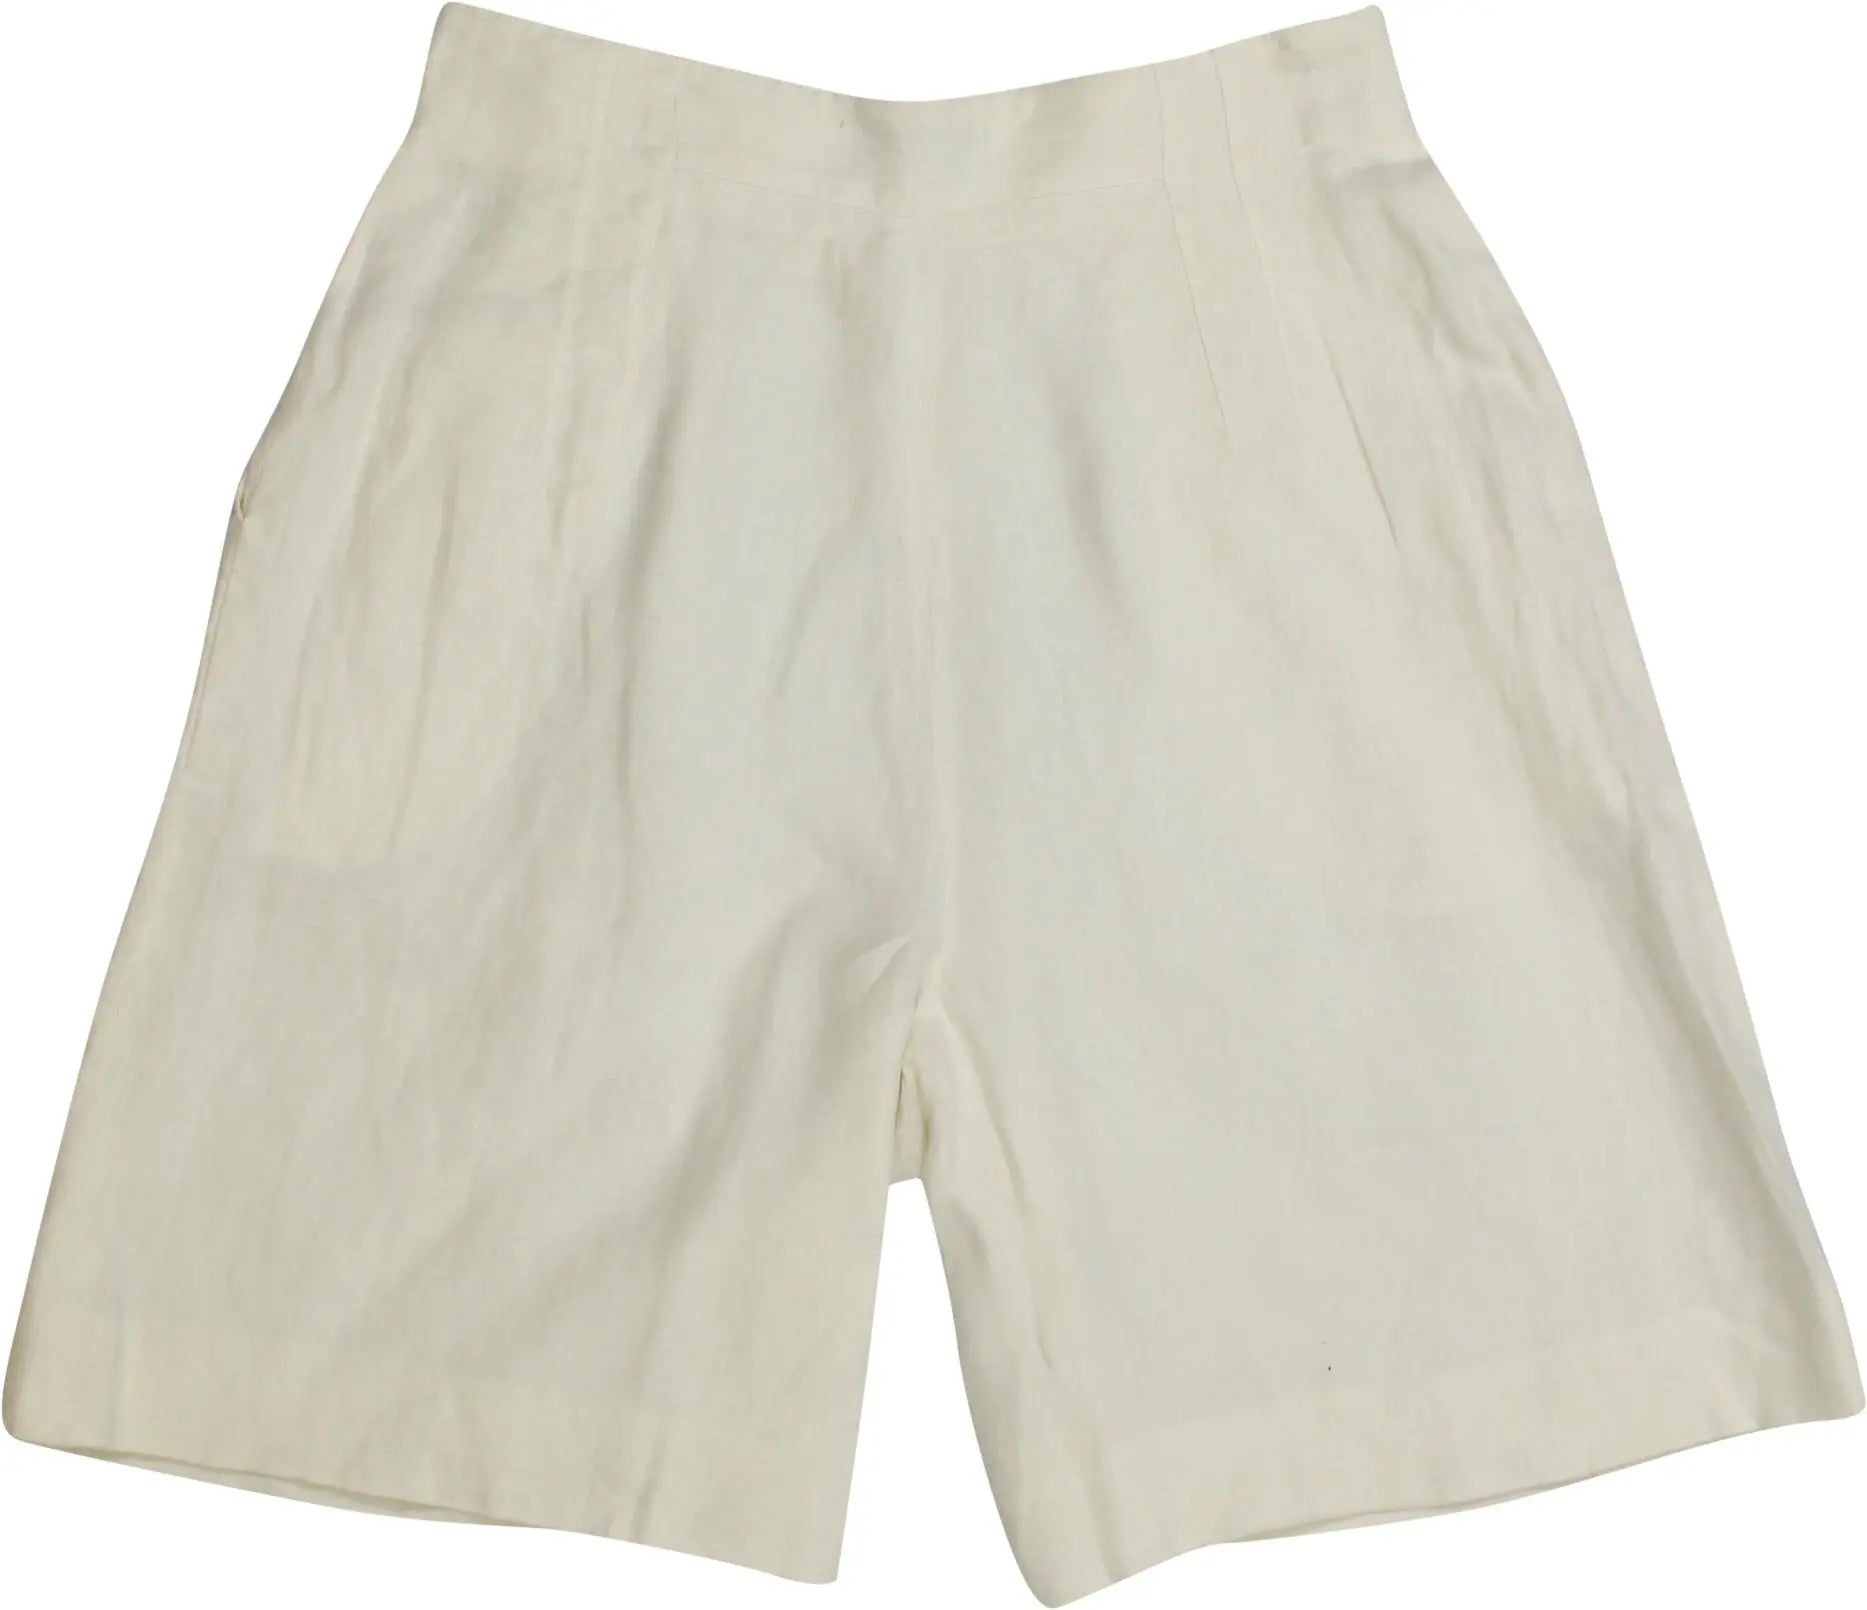 Les Copains - 100% Linen Shorts by Les Copains- ThriftTale.com - Vintage and second handclothing